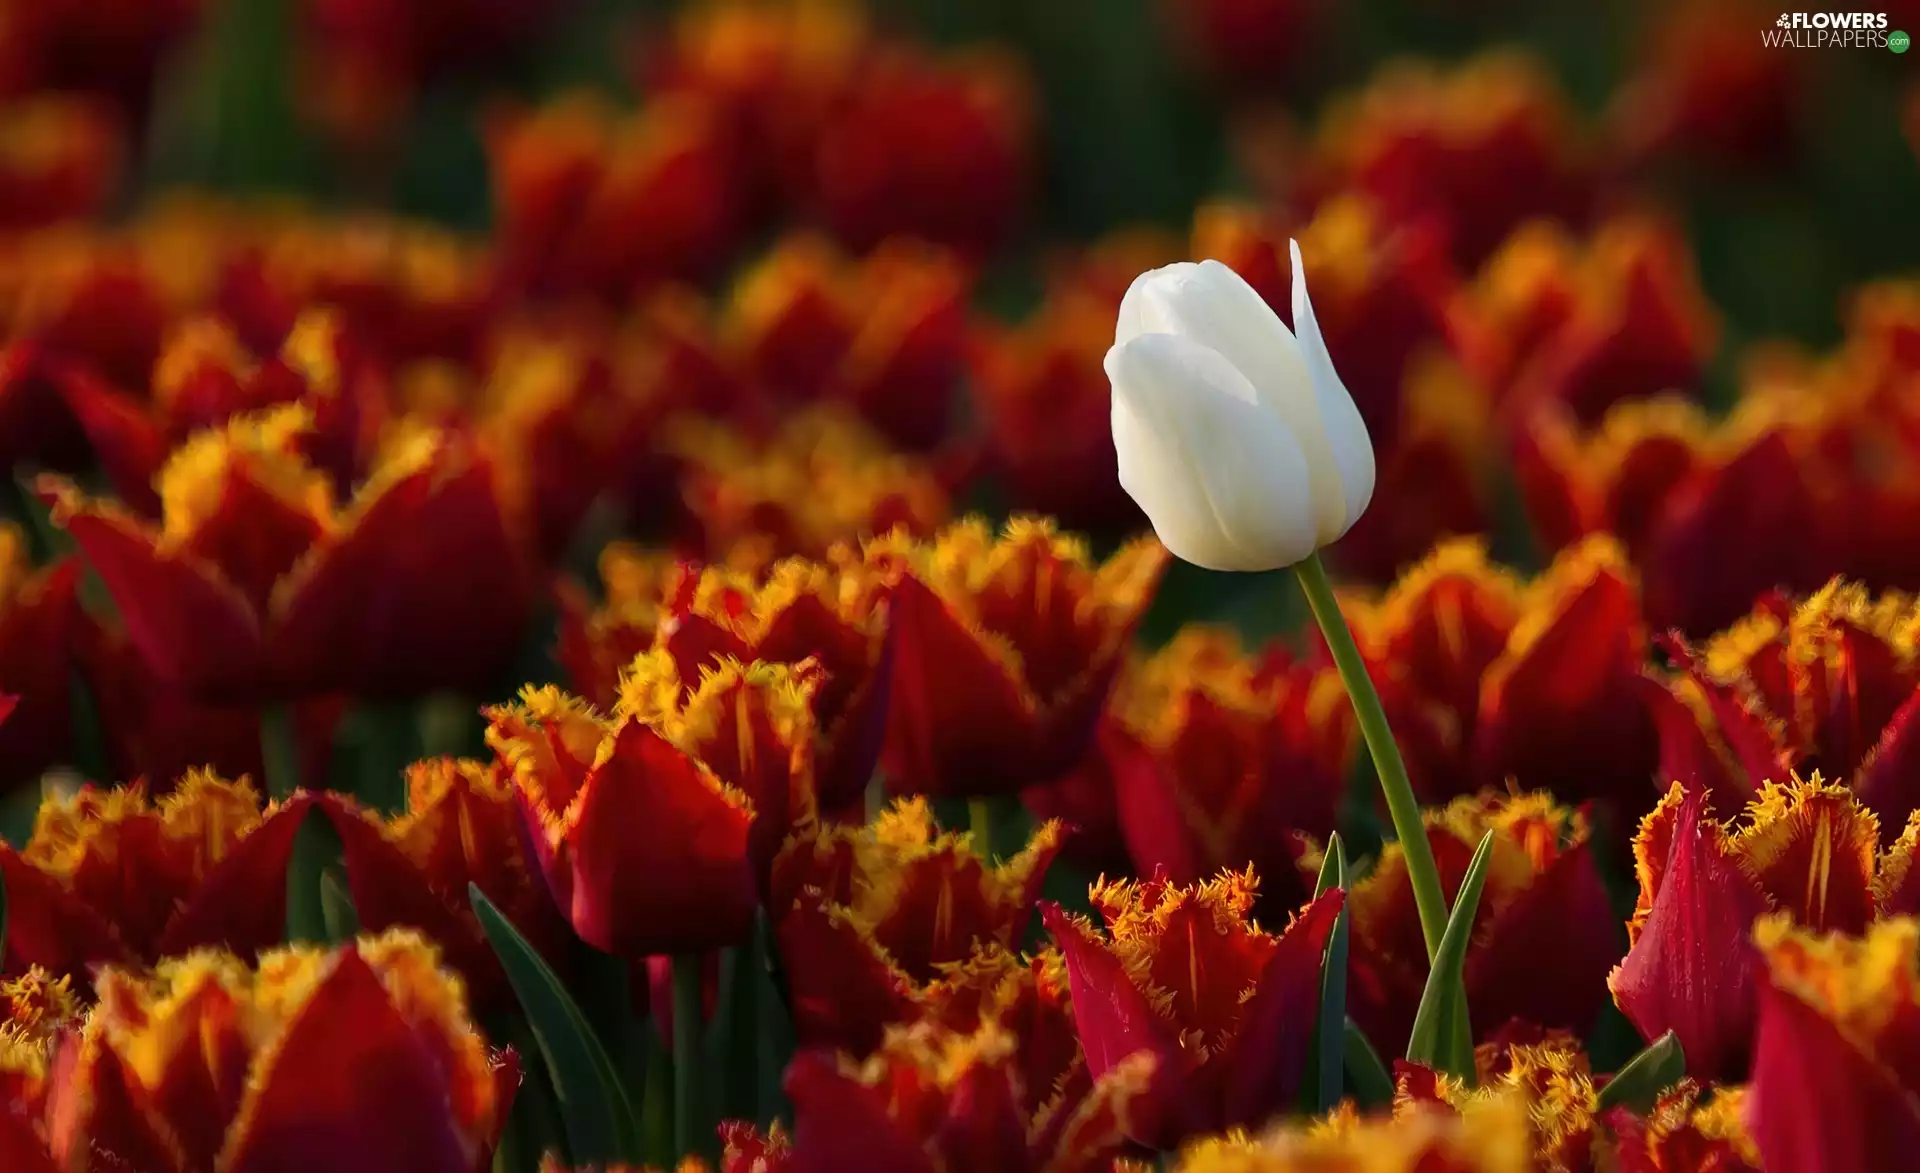 a distinctive, tulip